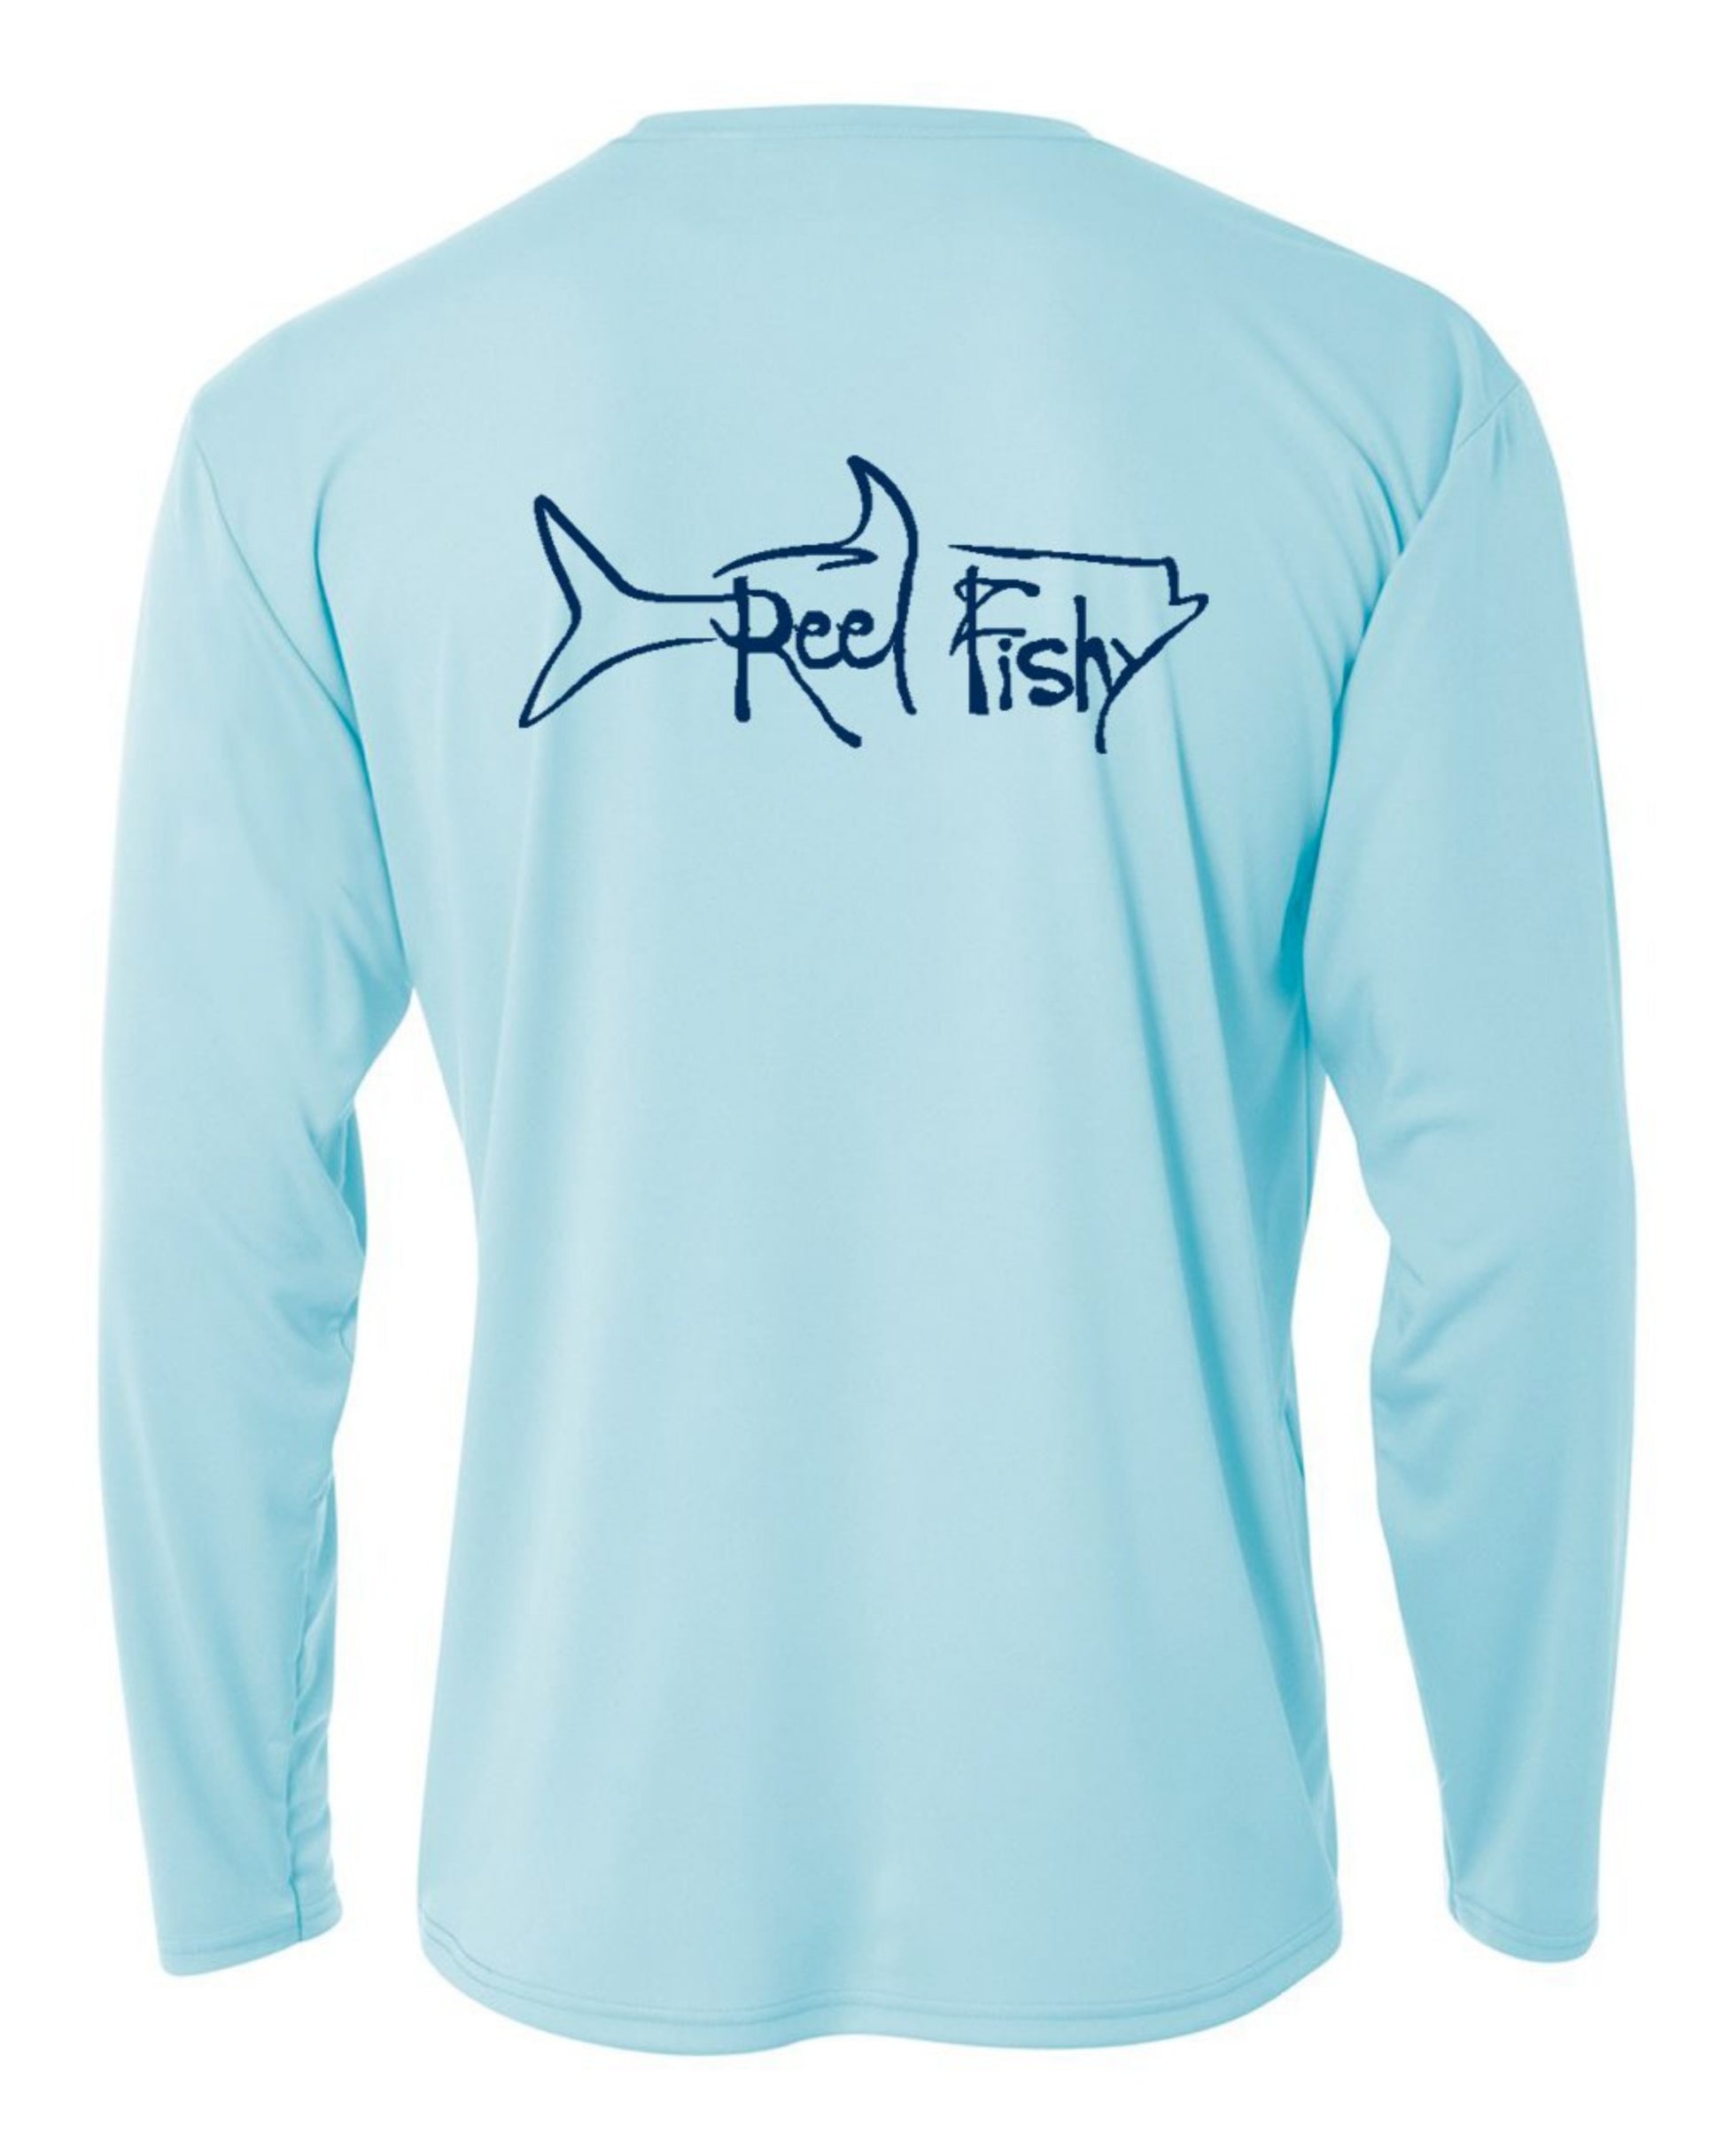 Youth Performance Dry-Fit Tarpon Fishing Shirts 50+Upf Sun Protection - Reel Fishy Apparel S / Pastel Mint L/S